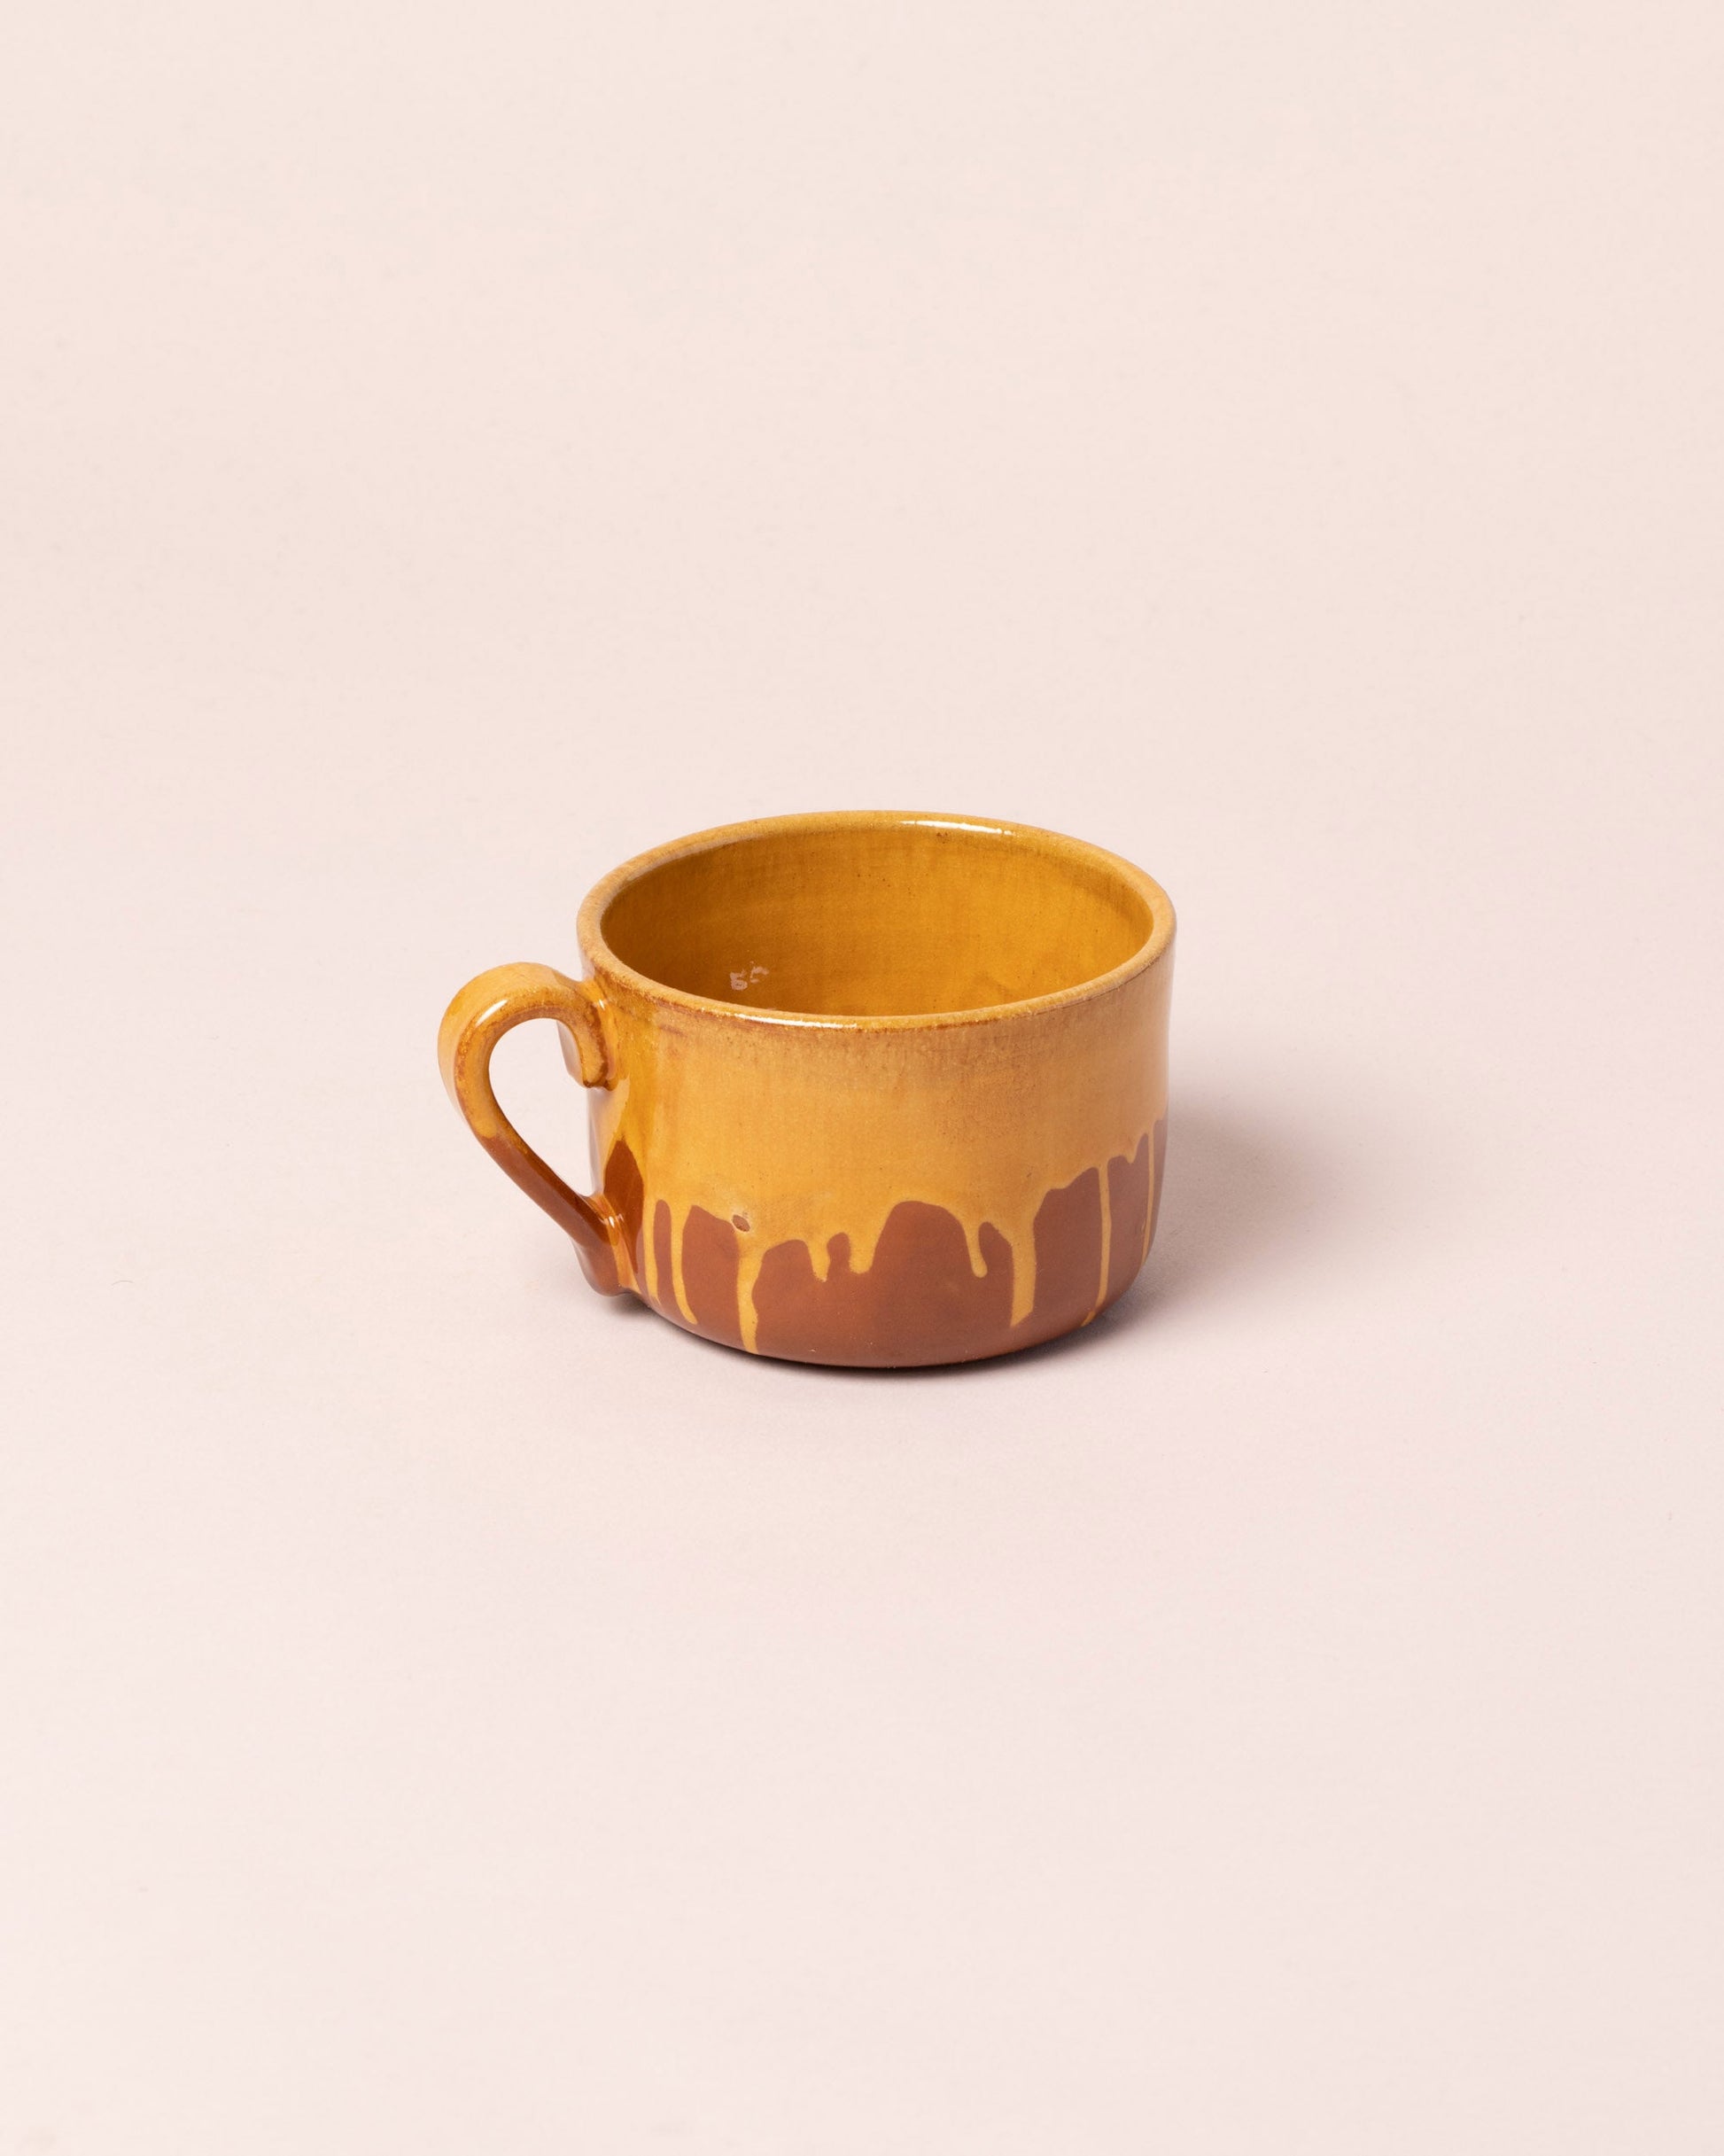  Del Monaco Tea Mug on light color background.